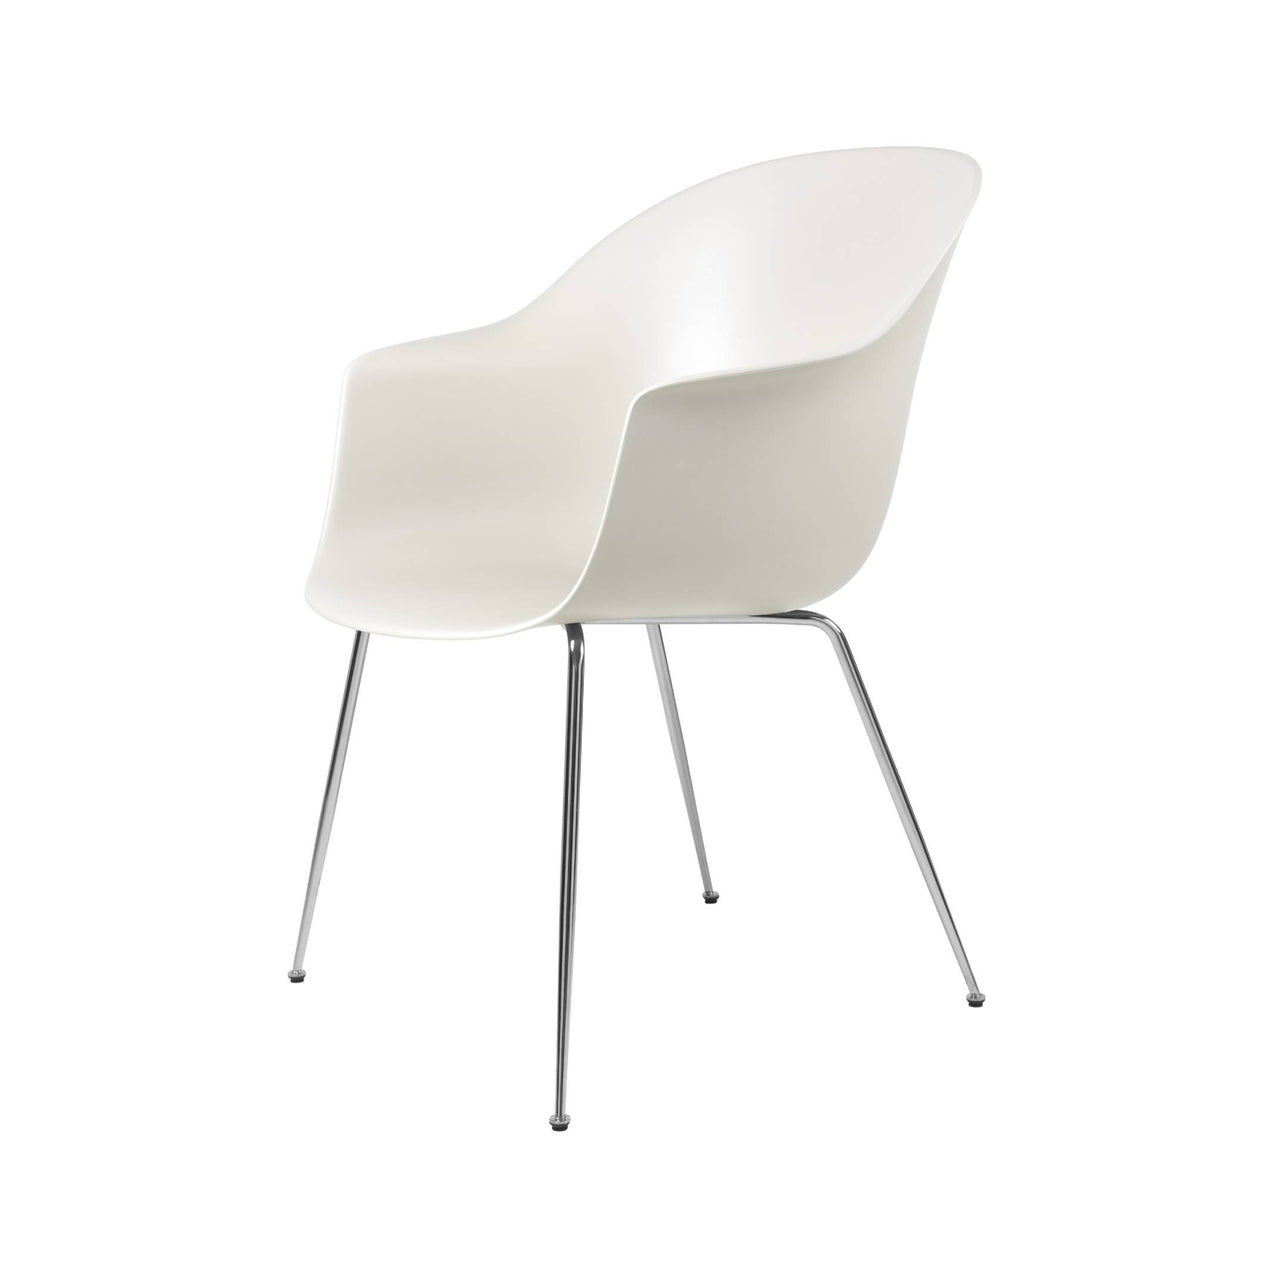 Bat Dining Chair: Conic Base + Chrome + Alabaster White + Felt Glides